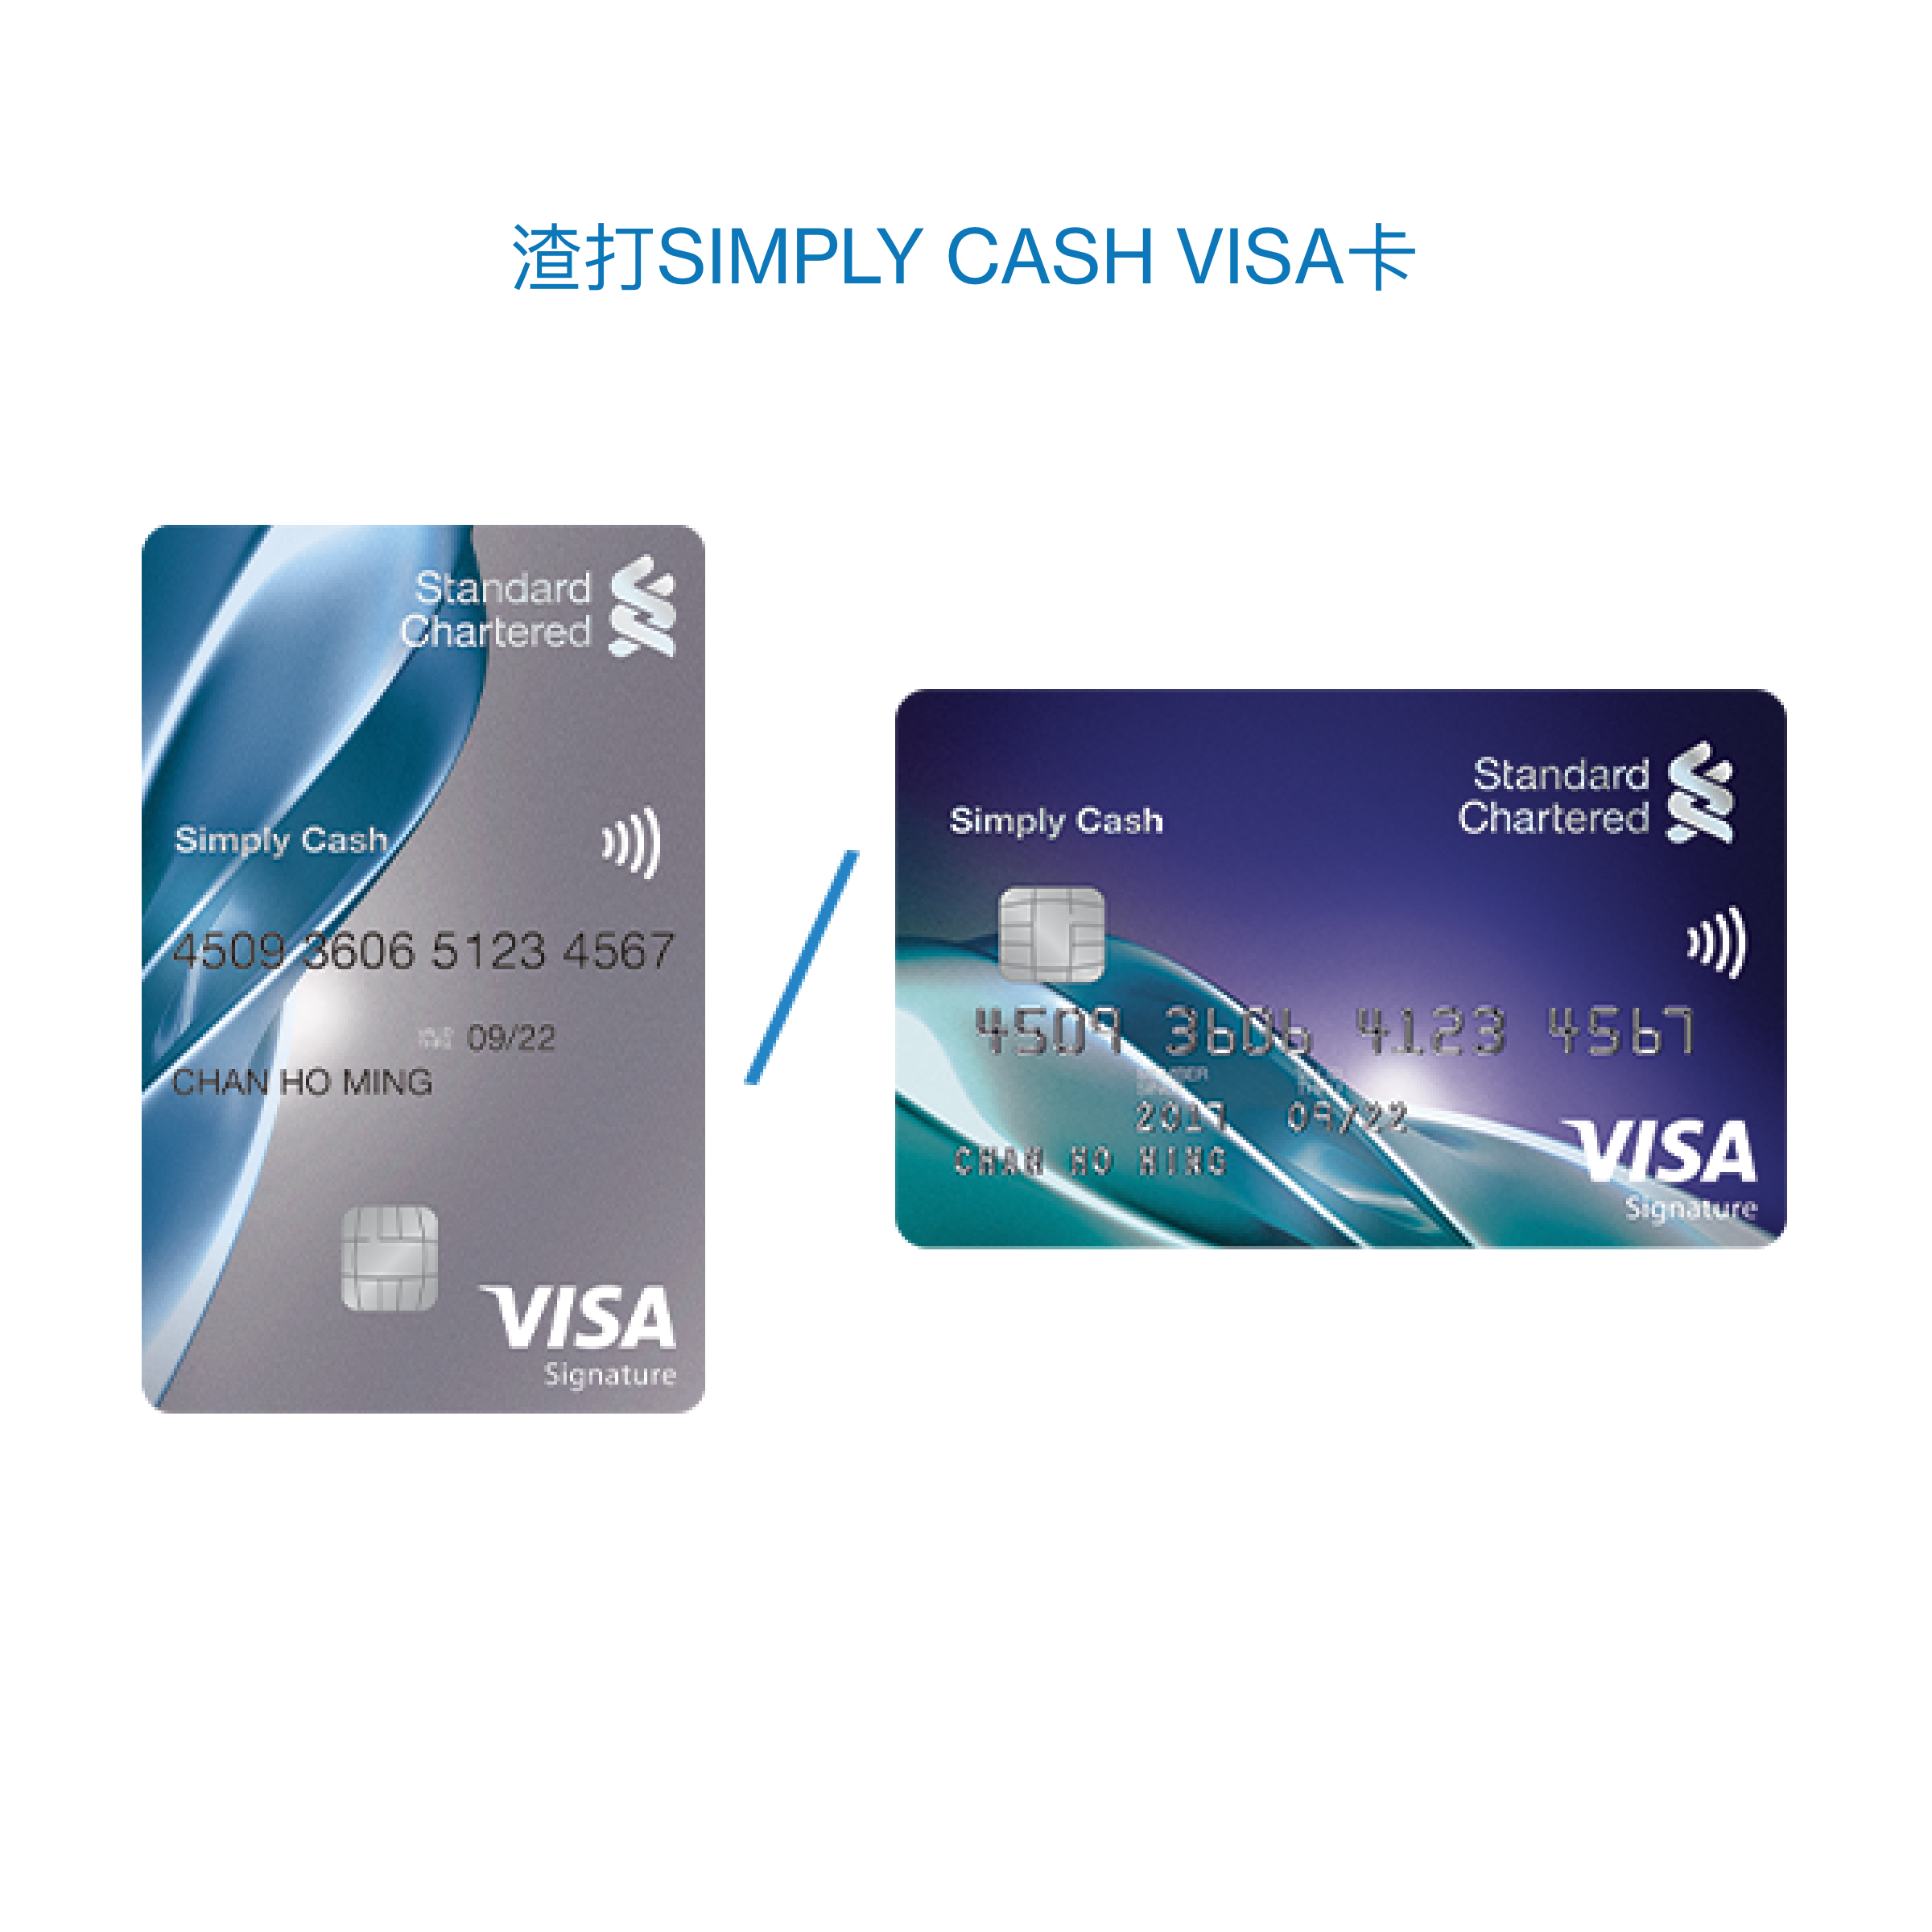 Cc category page – simply cash visa card